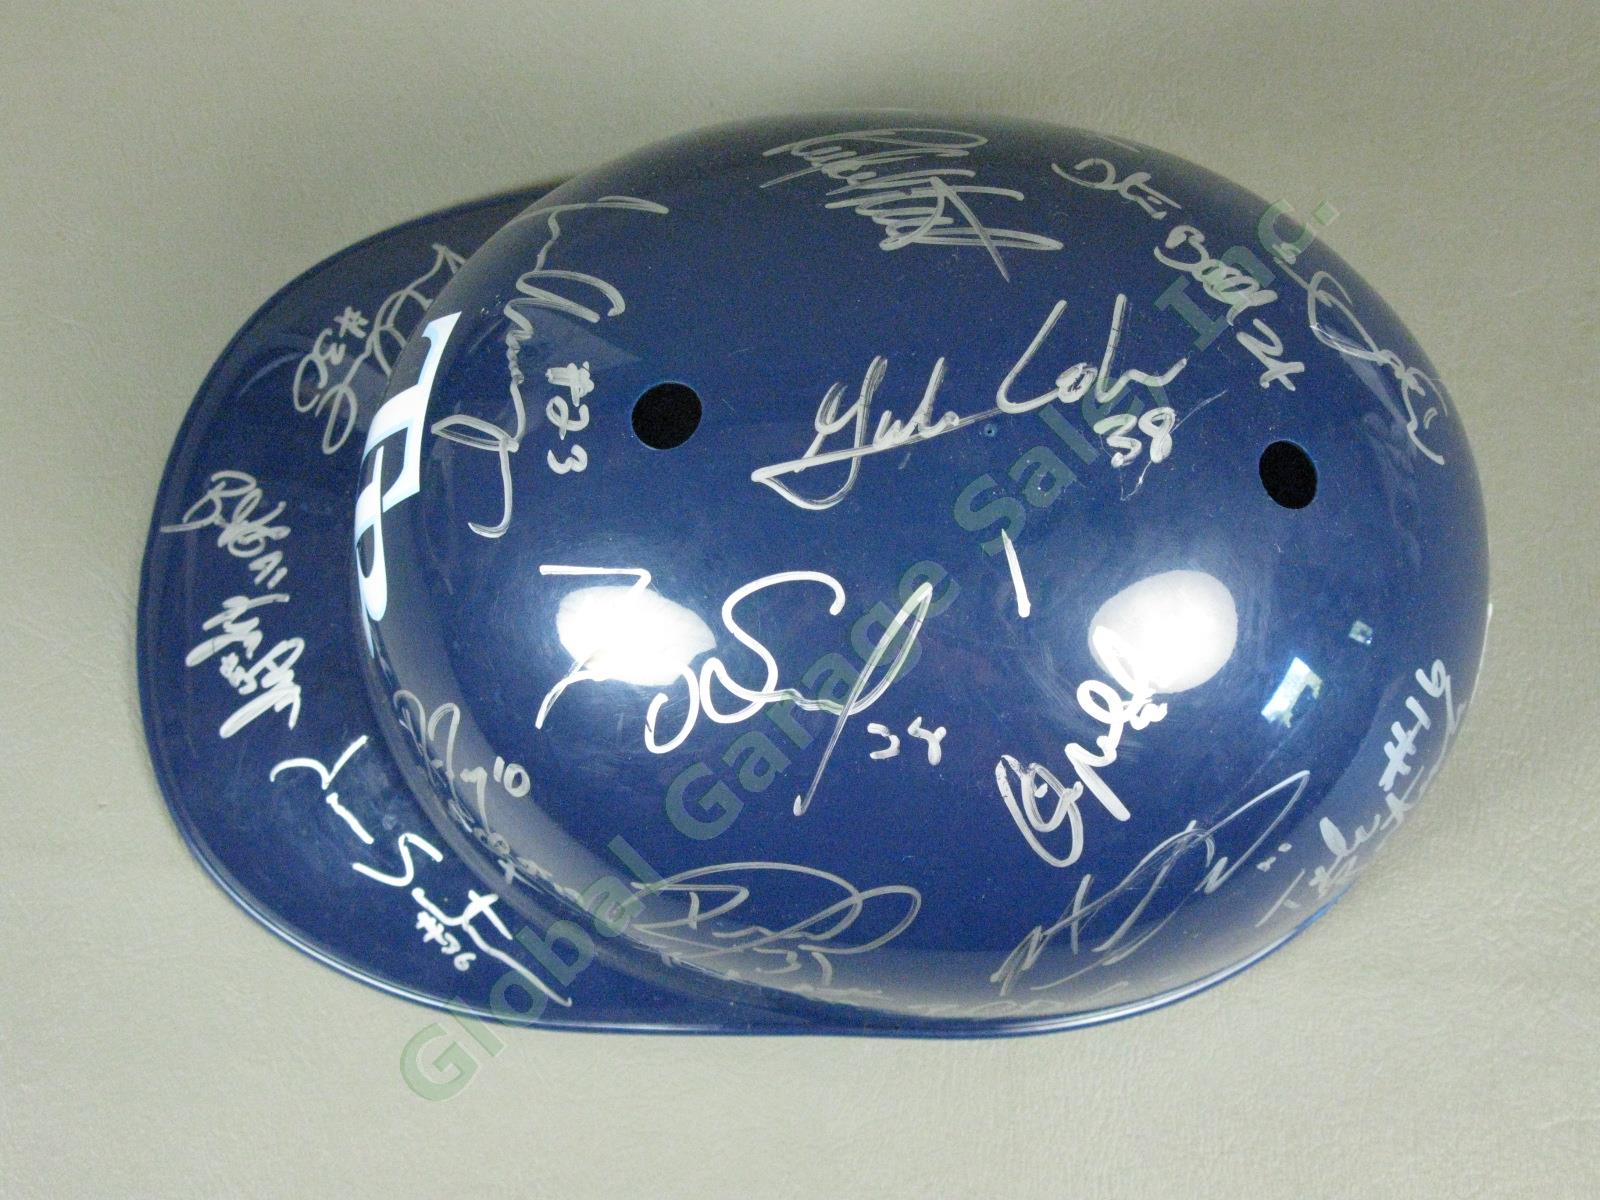 2009 Hudson Valley Renegades Team Signed Baseball Helmet NYPL Tampa Bay Rays NR 4